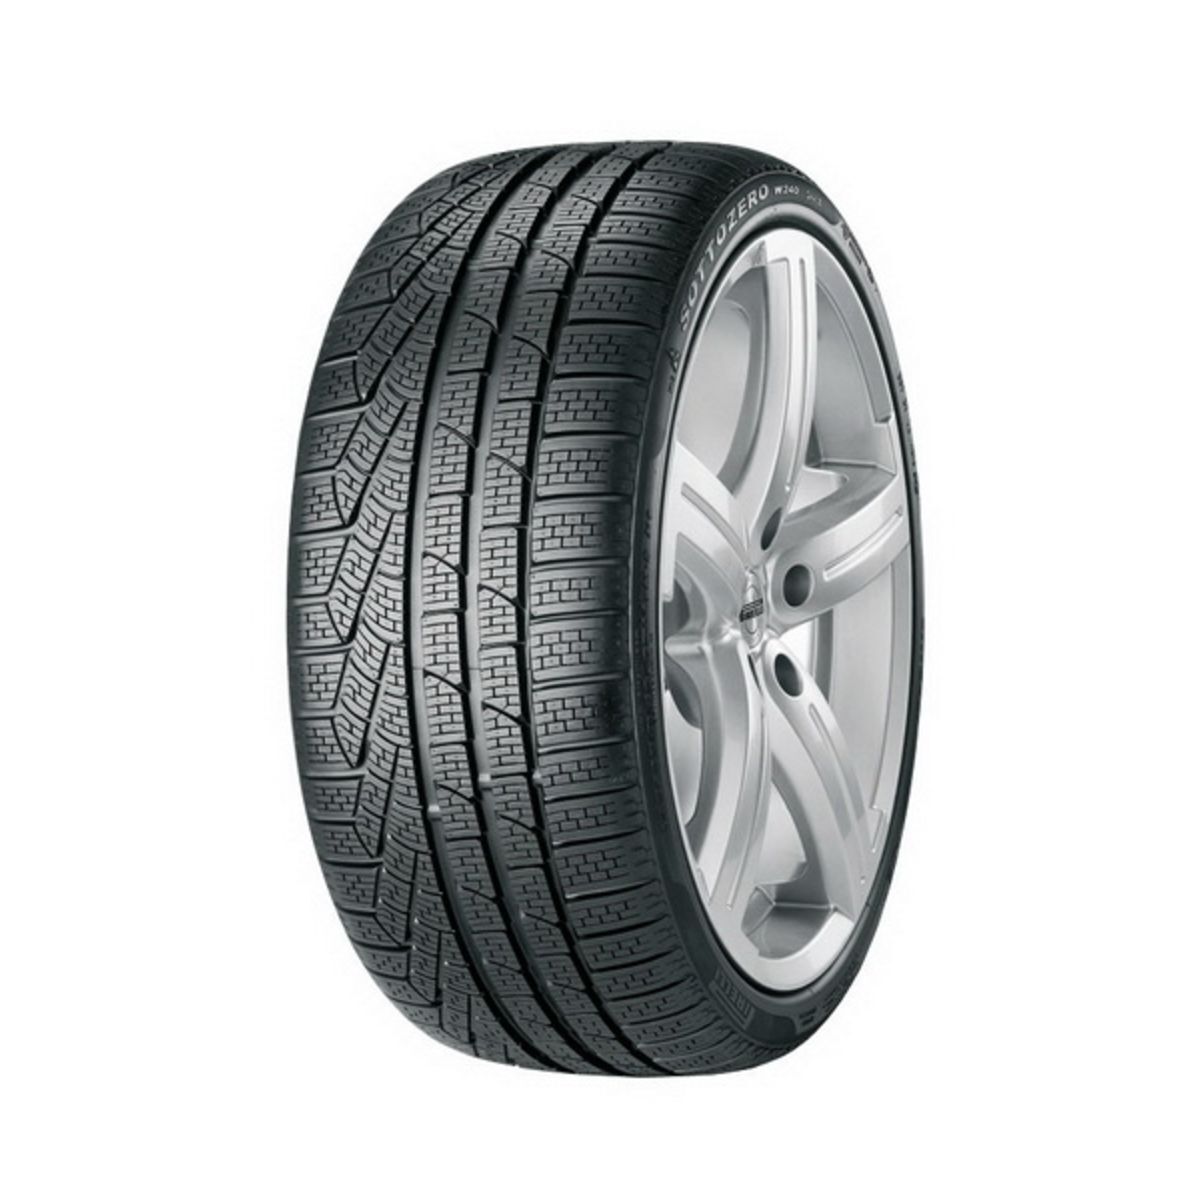 Neumáticos de invierno PIRELLI SottoZero serie II 205/65R17 96H